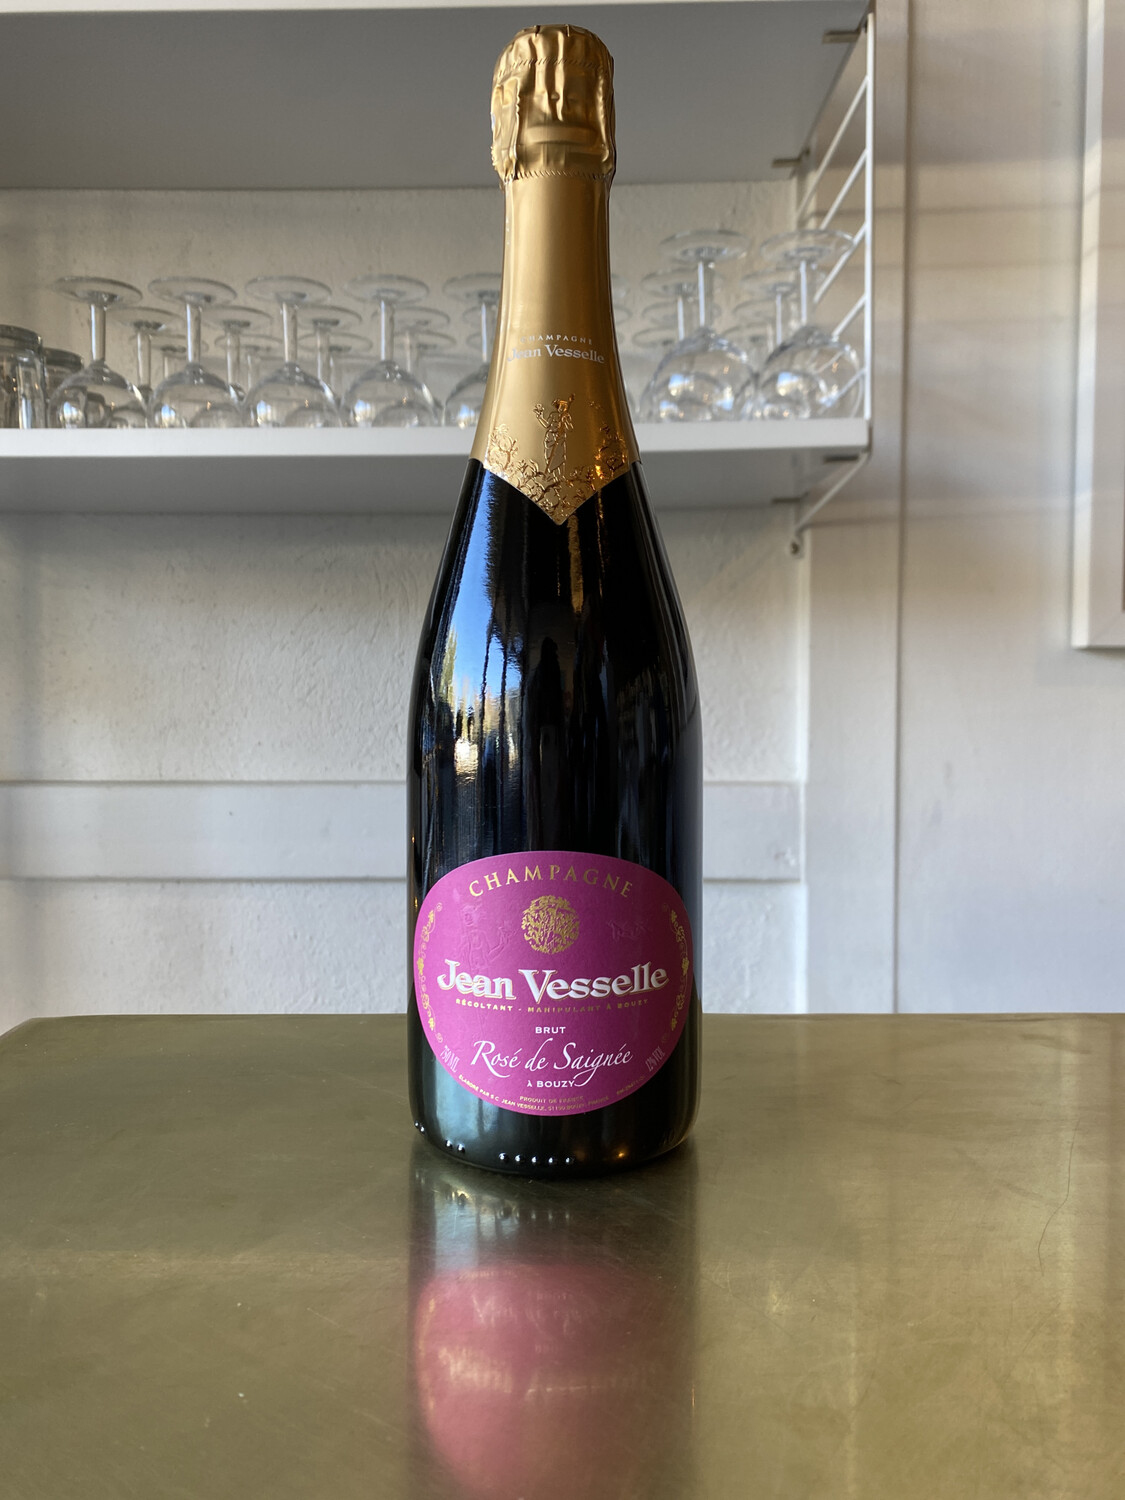 Jean Vesselle, Champagne Brut Rose de Saignee